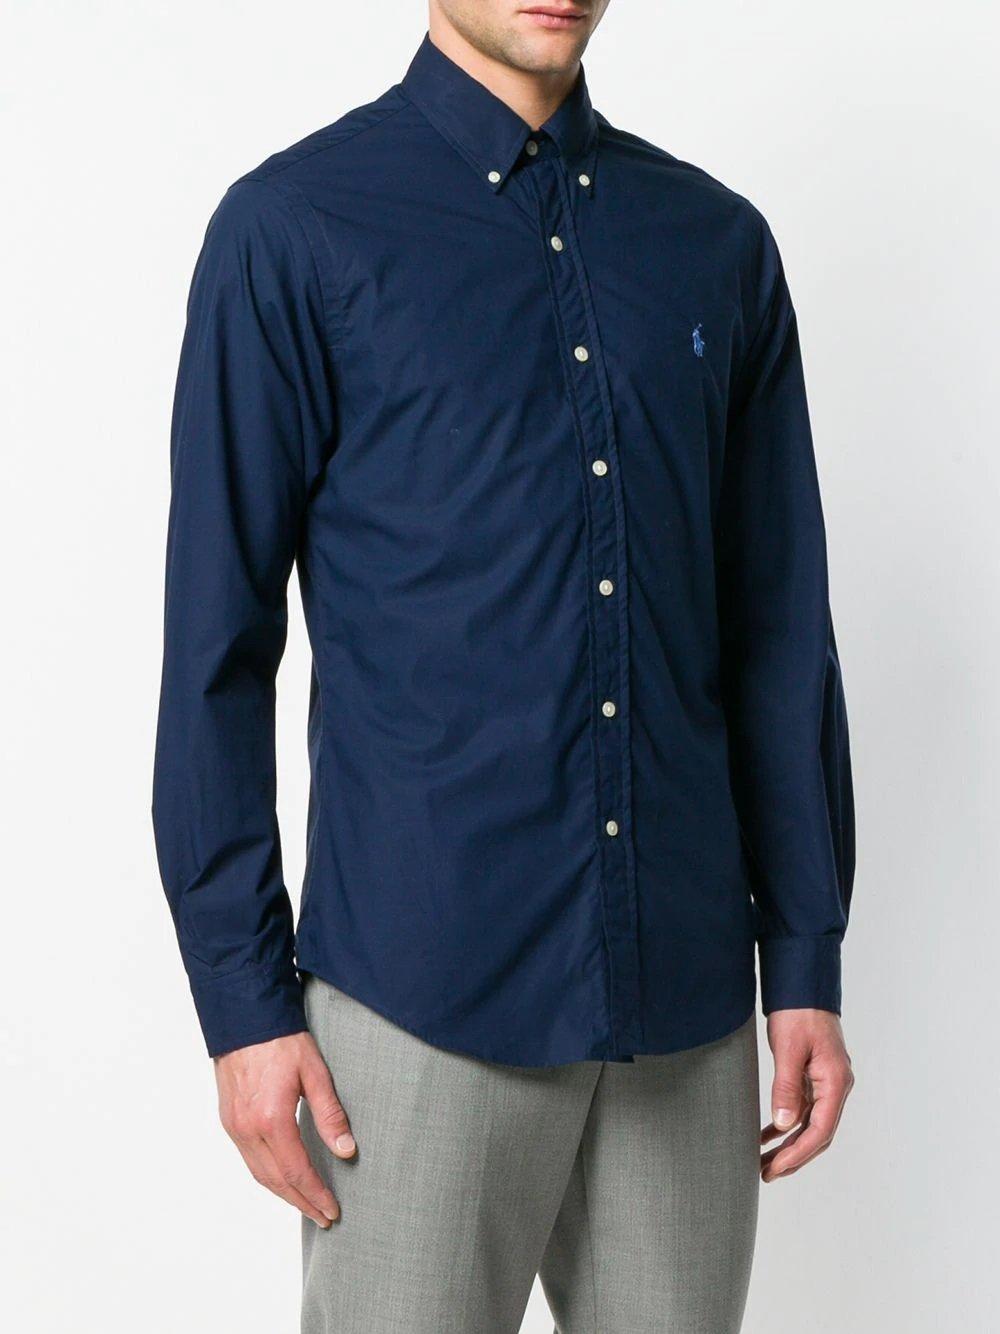 Ralph Lauren Shirts in Blue for Men - Save 27% - Lyst